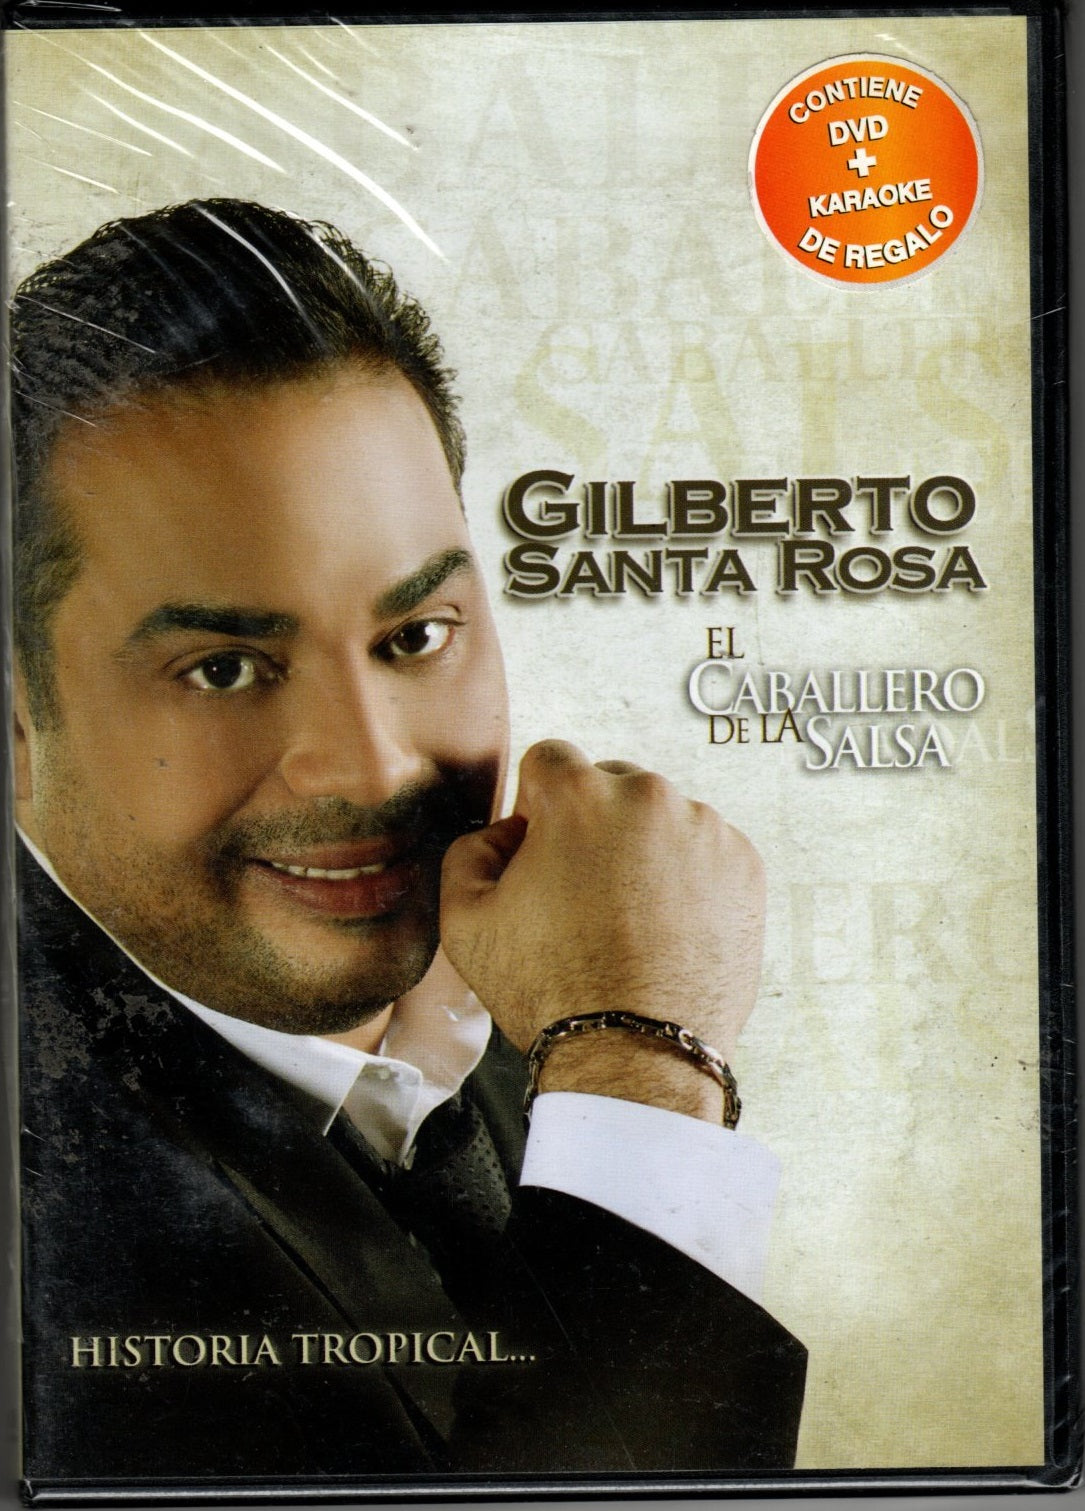 DVD + Karaoke Gilberto Santa Rosa - Historia Tropical